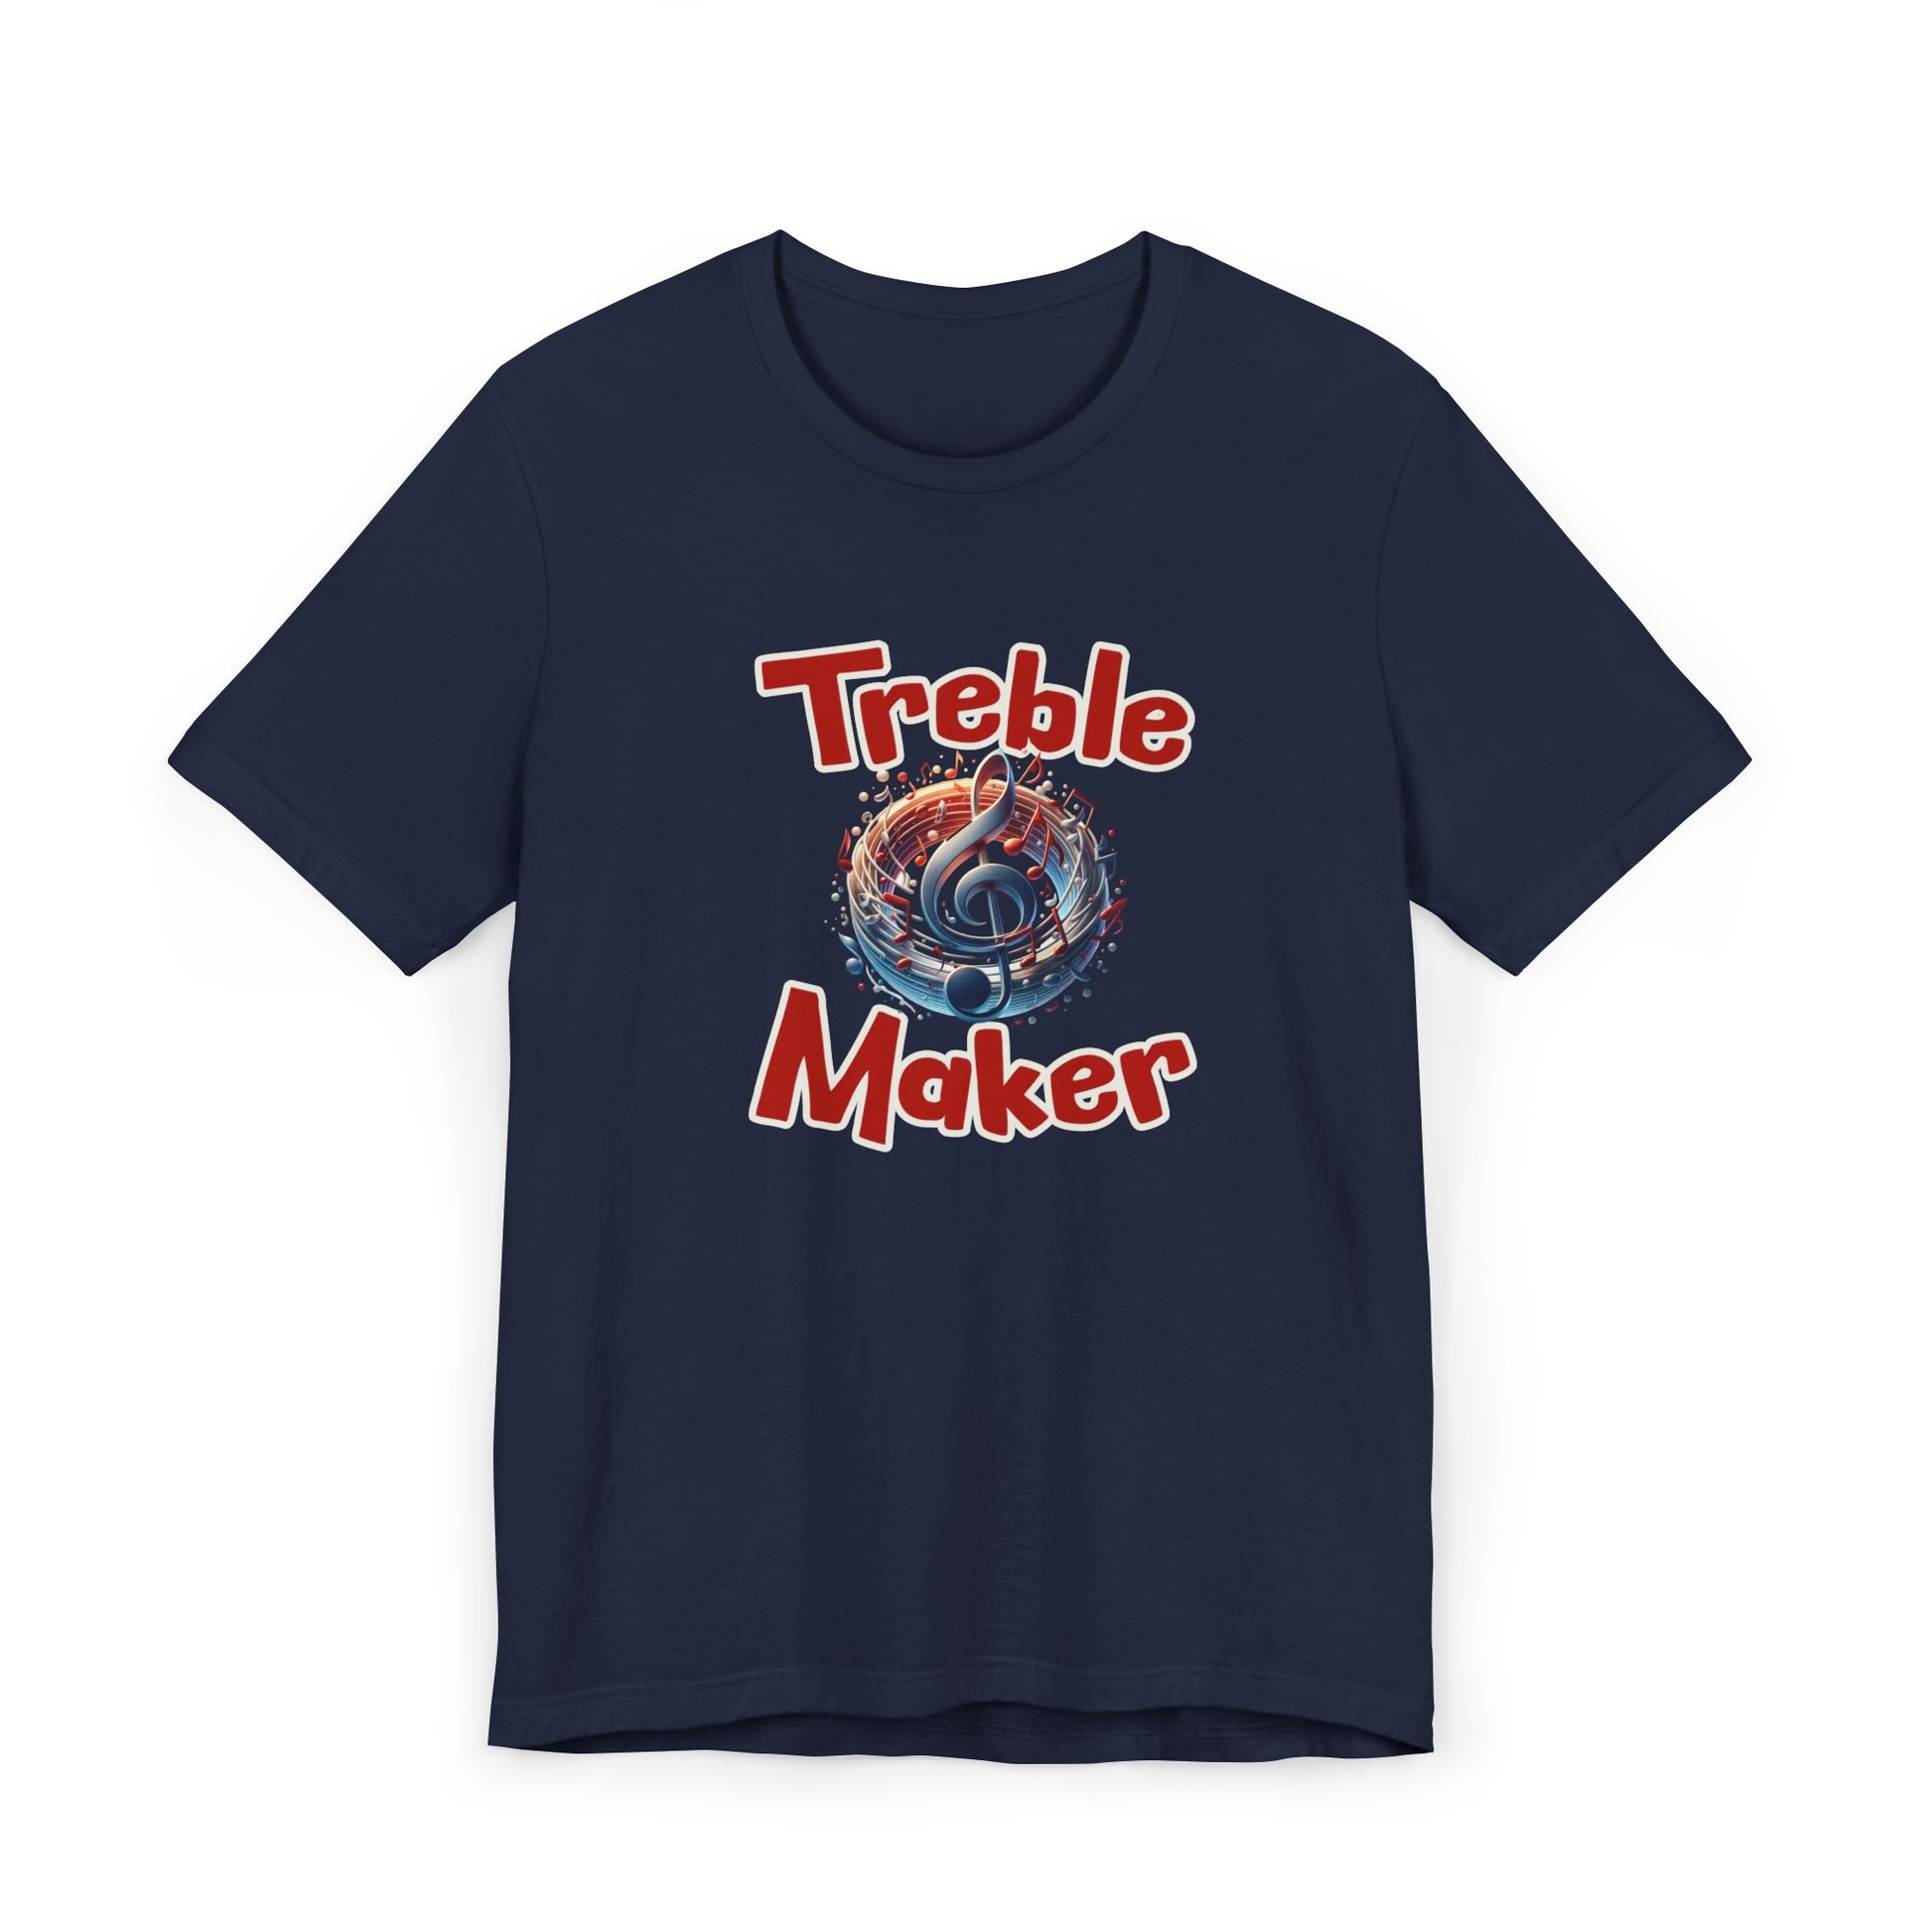 Treble Maker T-shirt in Navy Blue 